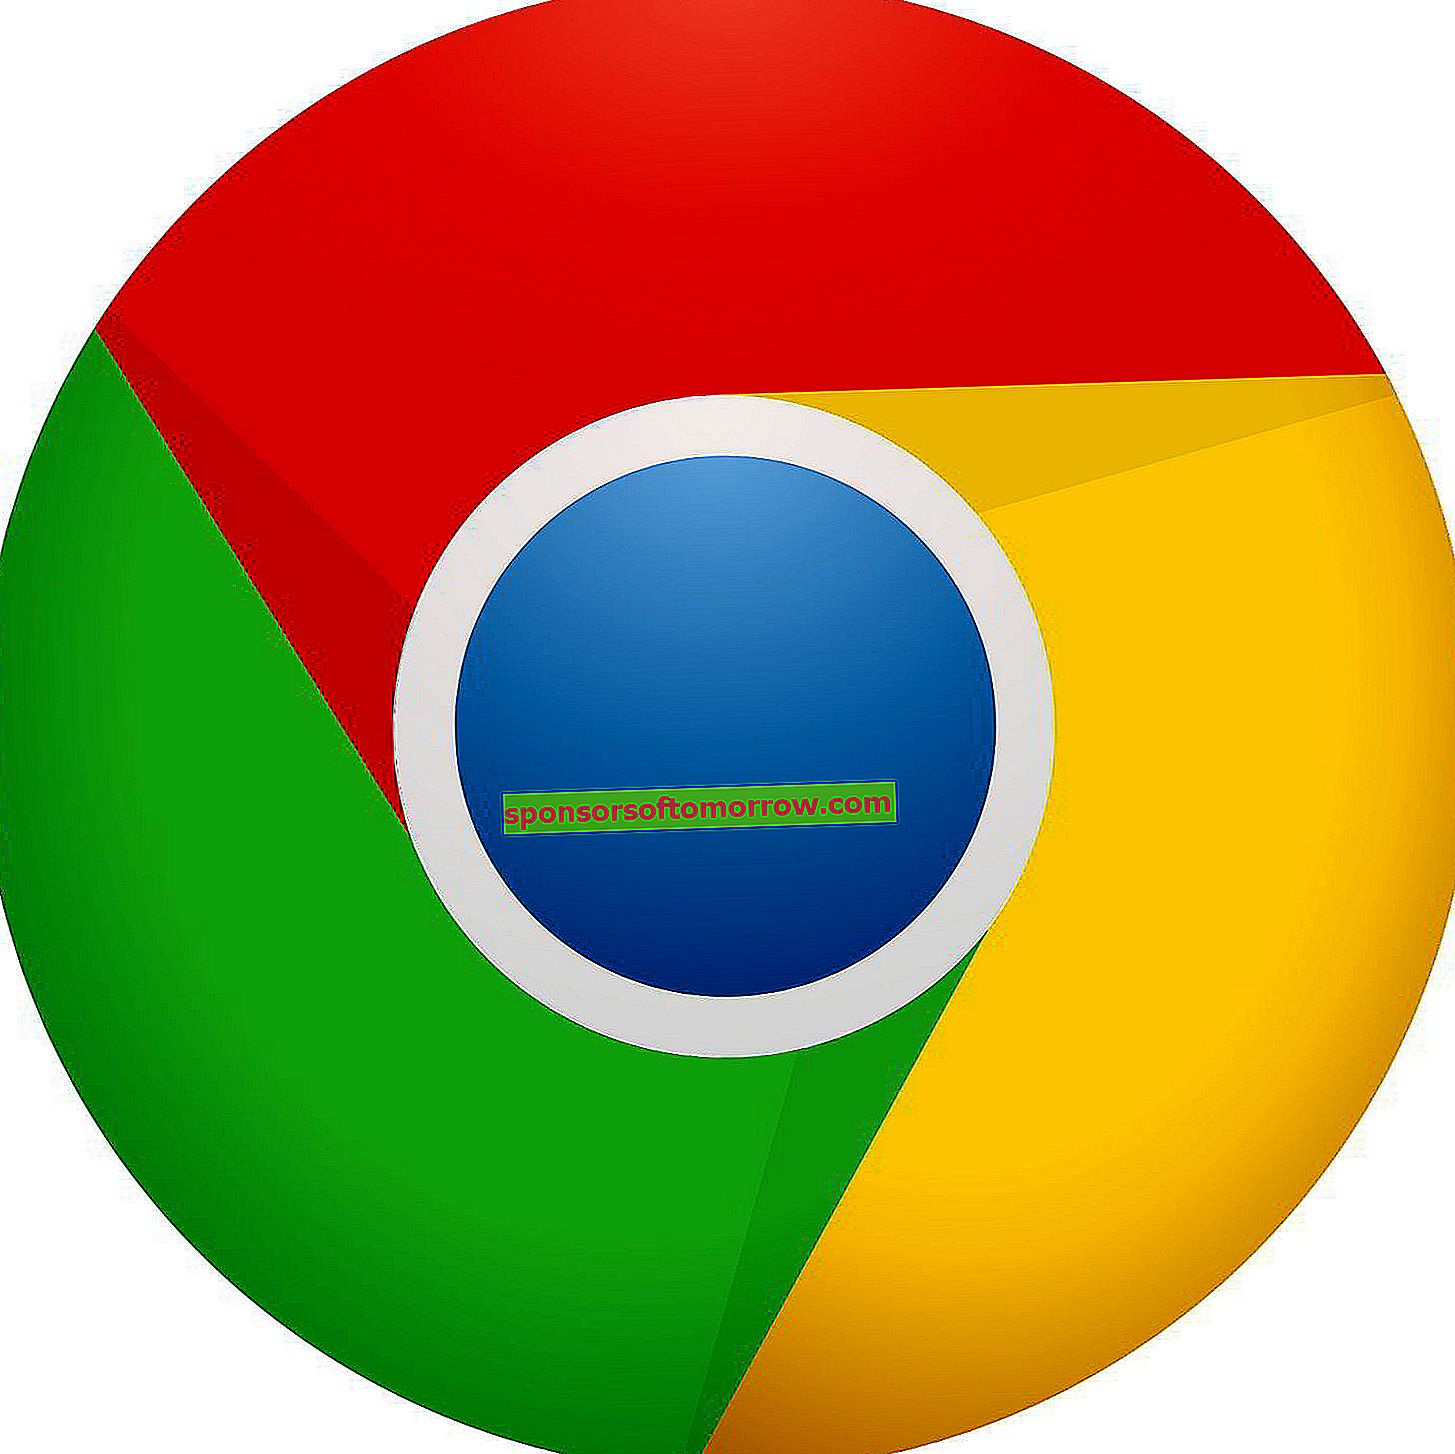 Cara memasang sambungan Google Chrome pada Android